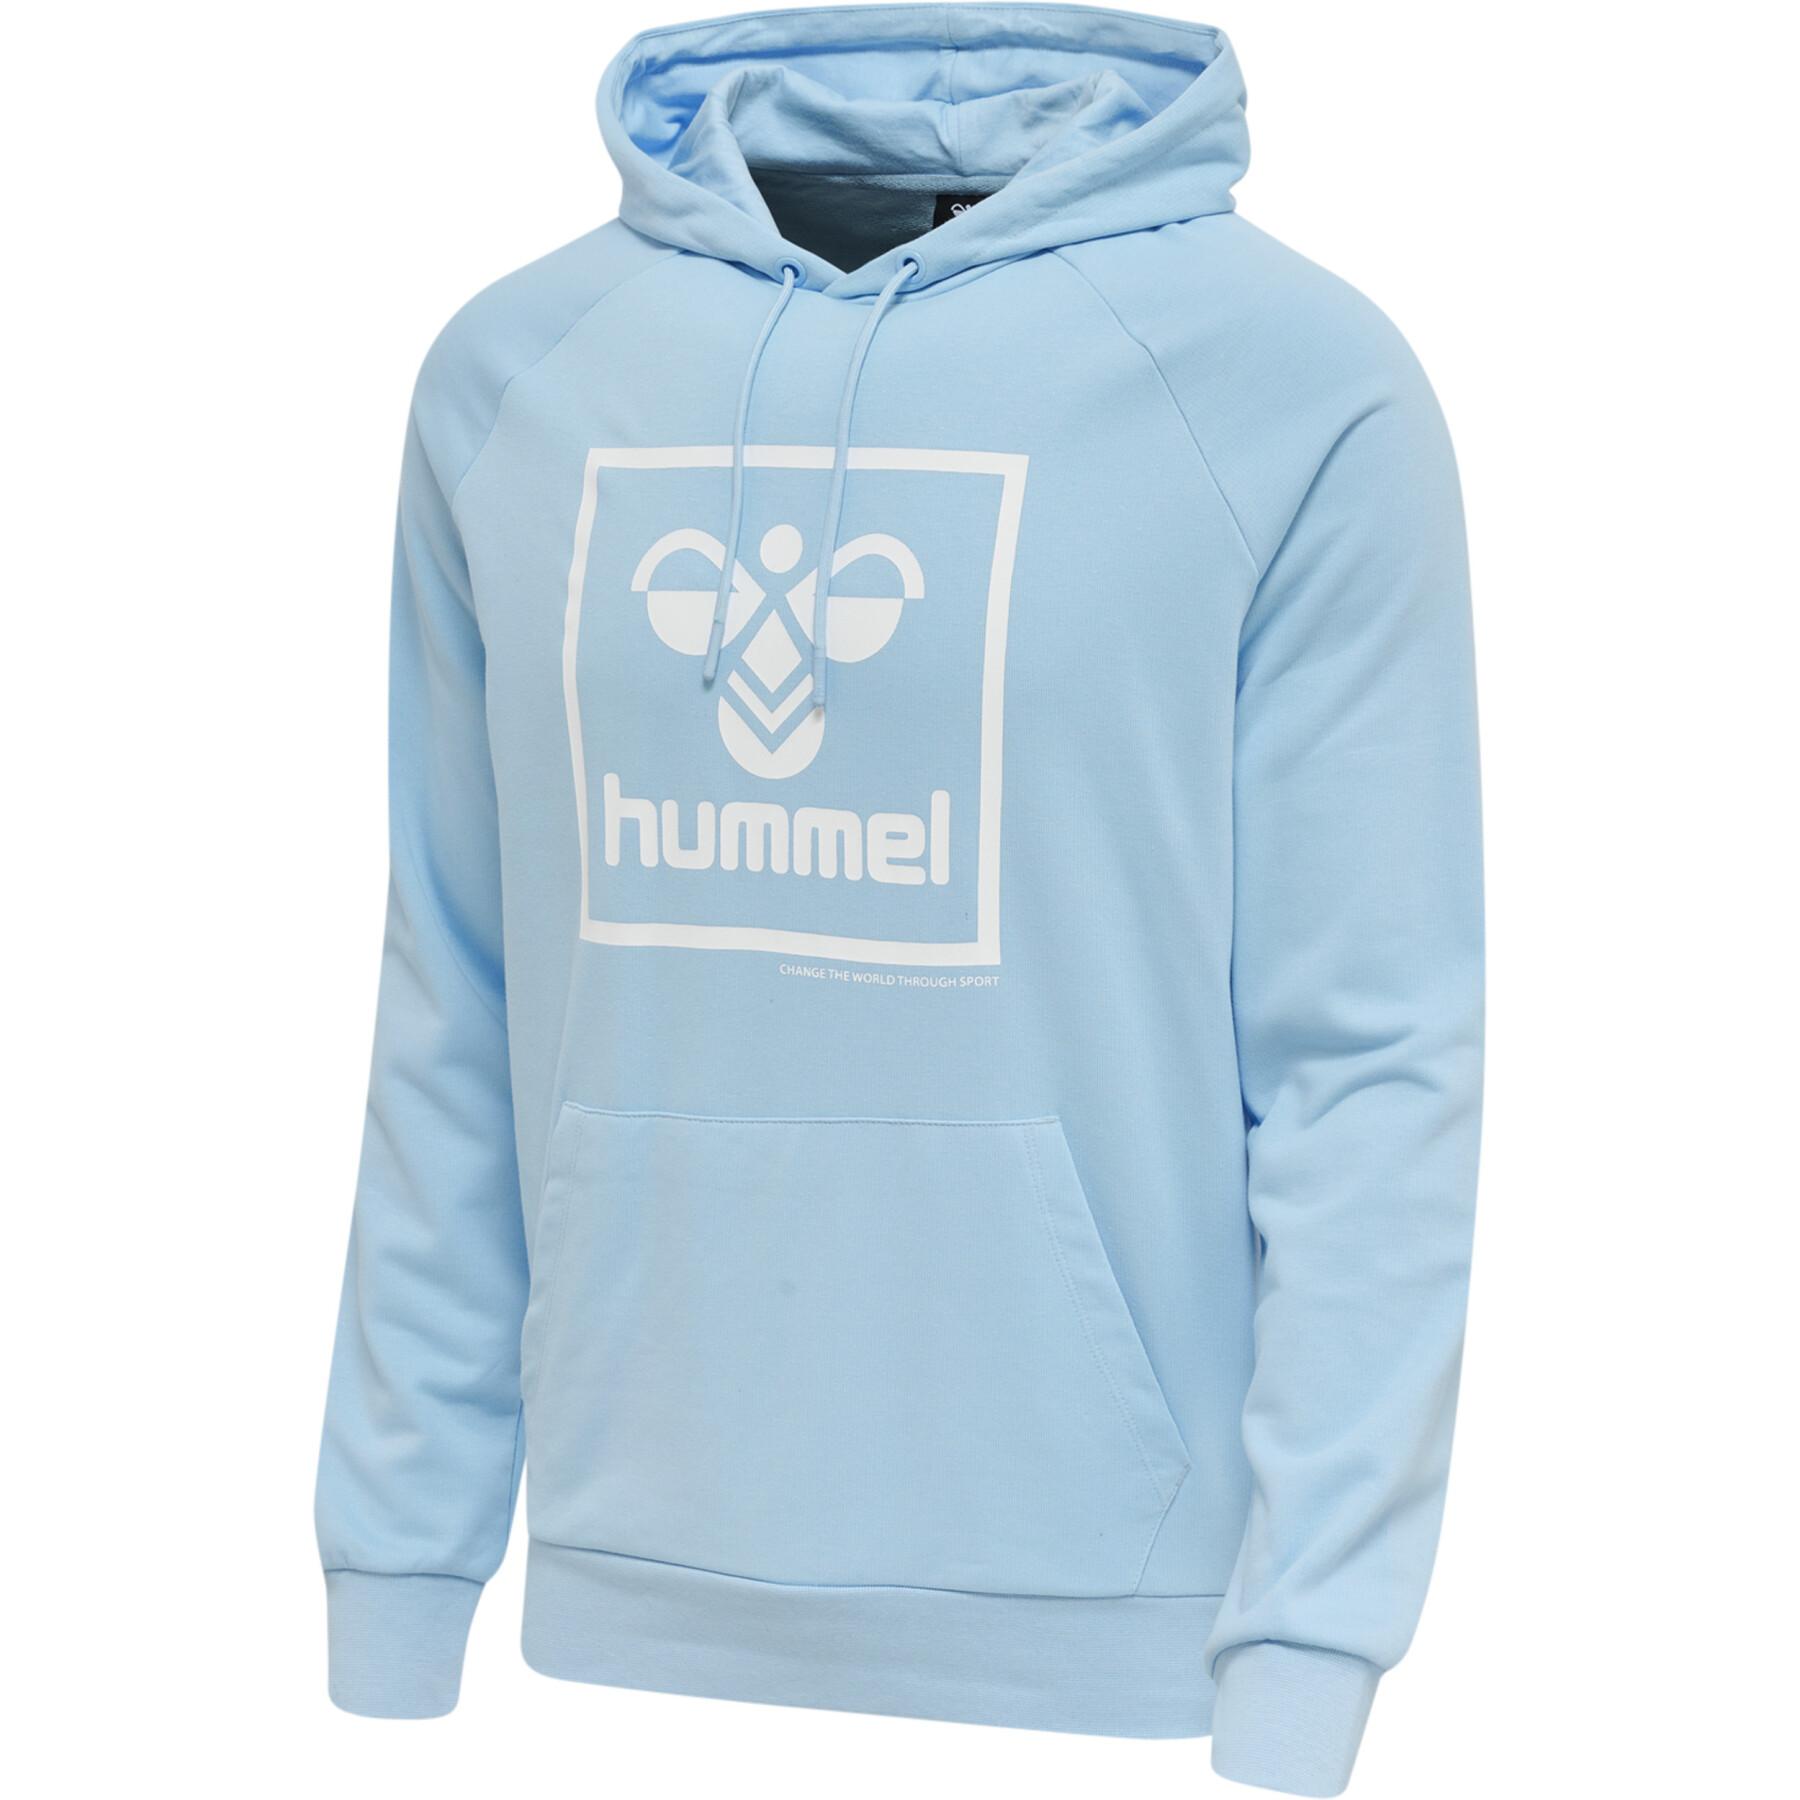 Hooded sweatshirt Hummel Isam 2.0 - Hummel - Brands - Lifestyle